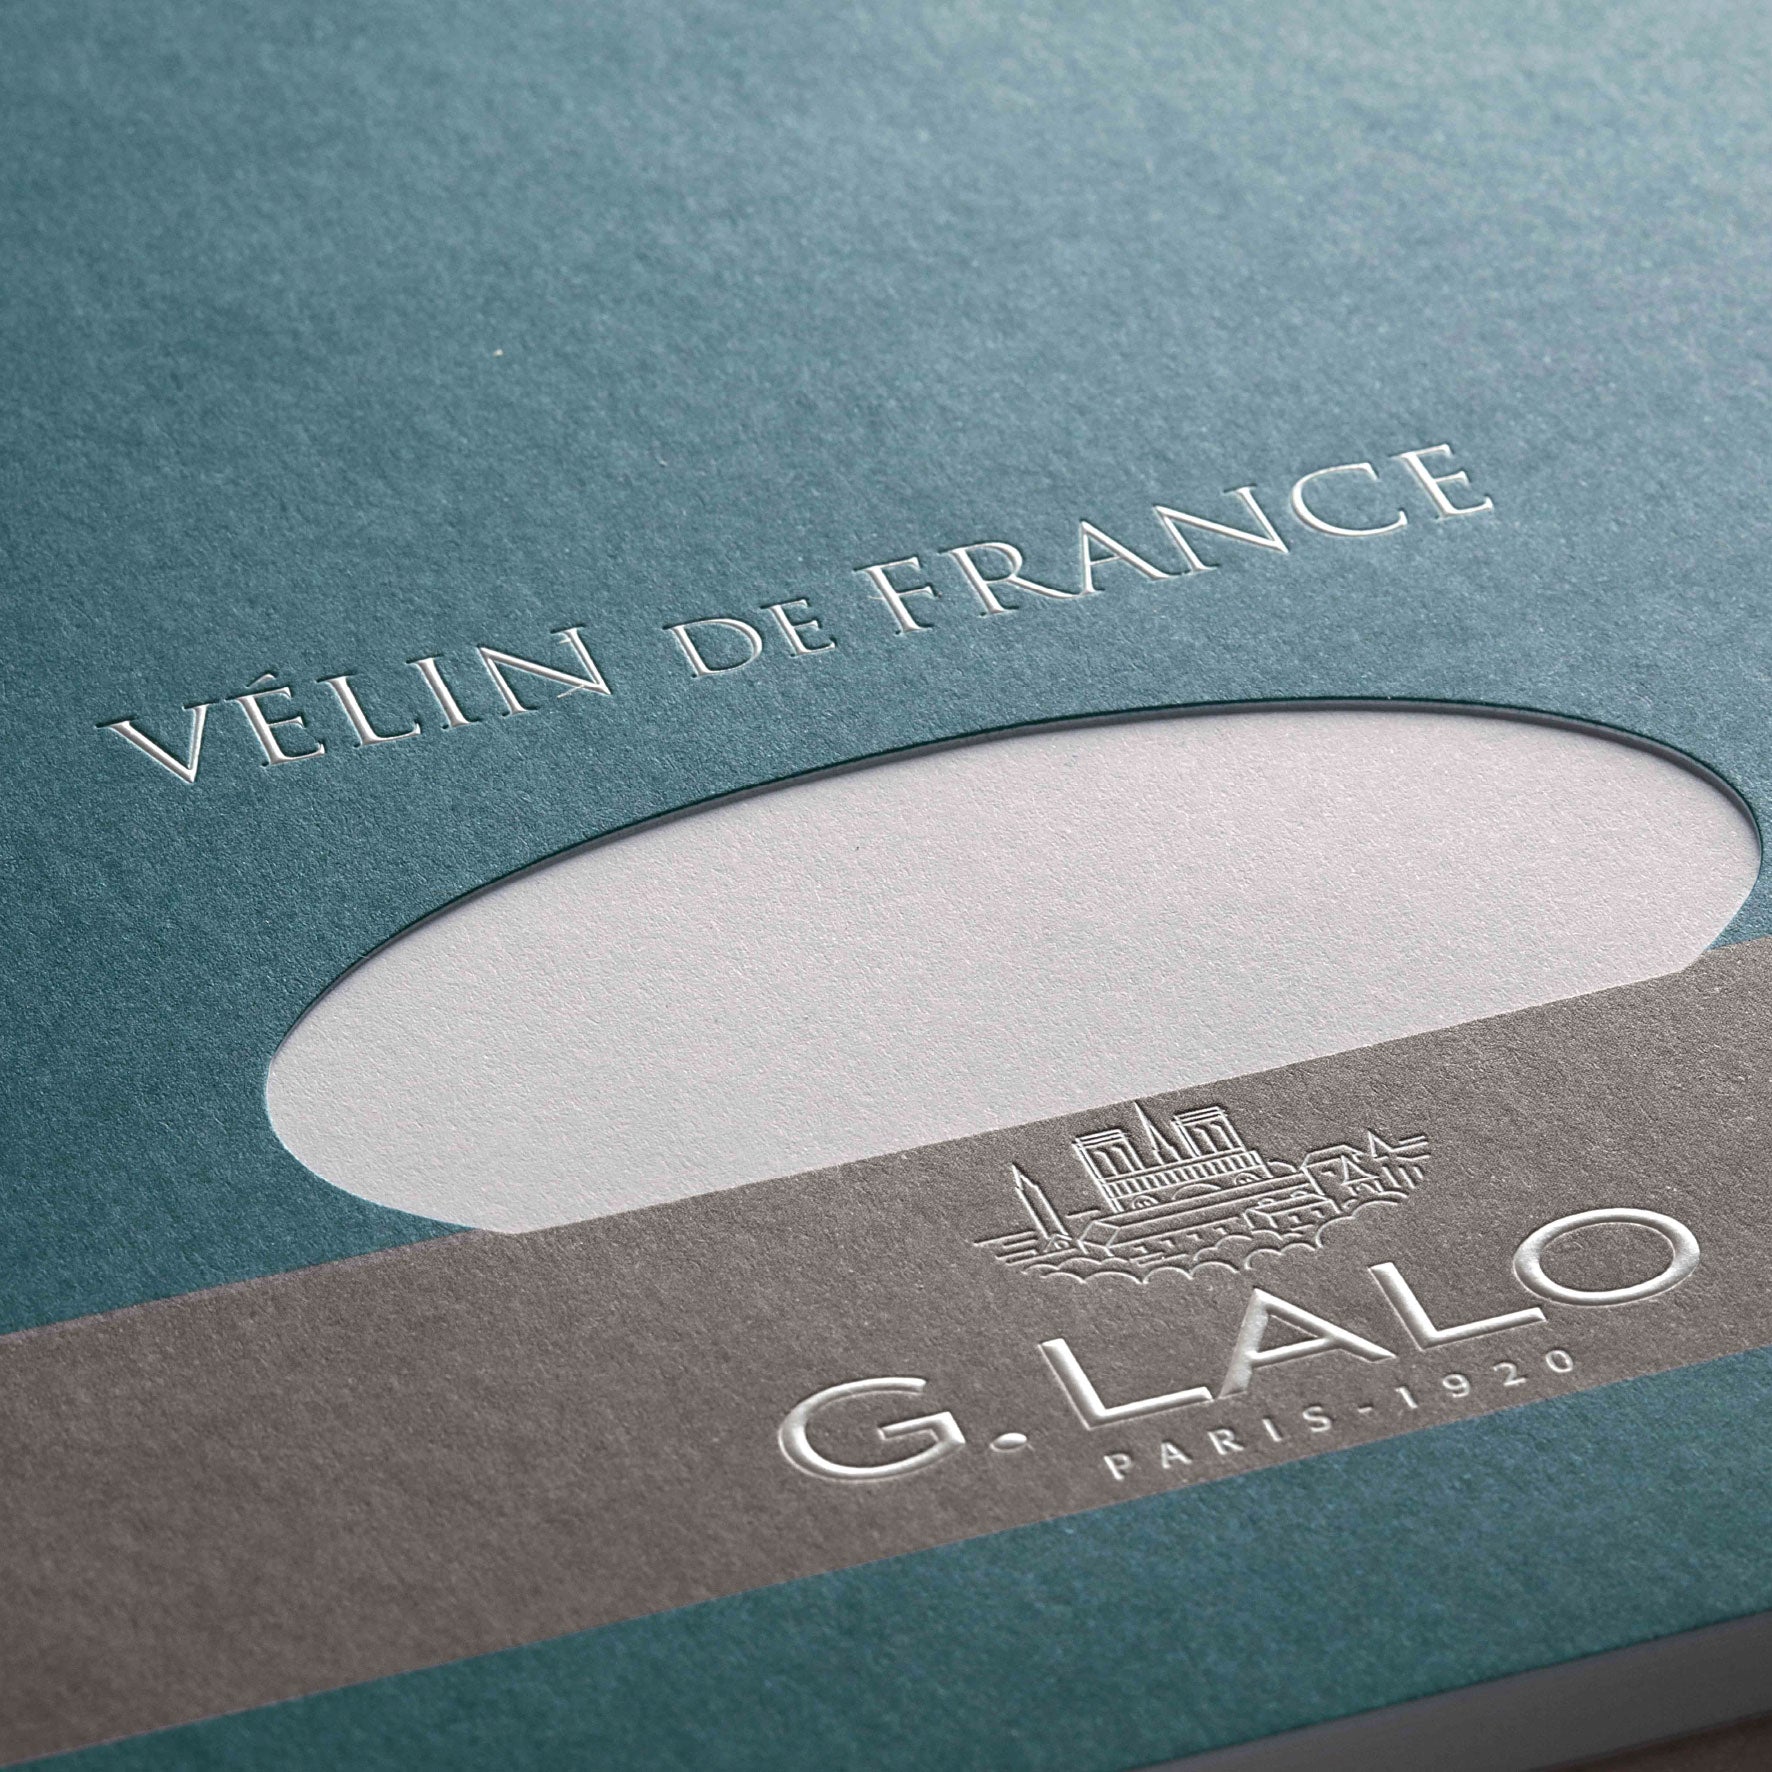 G. Lalo - Writing Pad - A5 - Smooth White (Vélin de France)